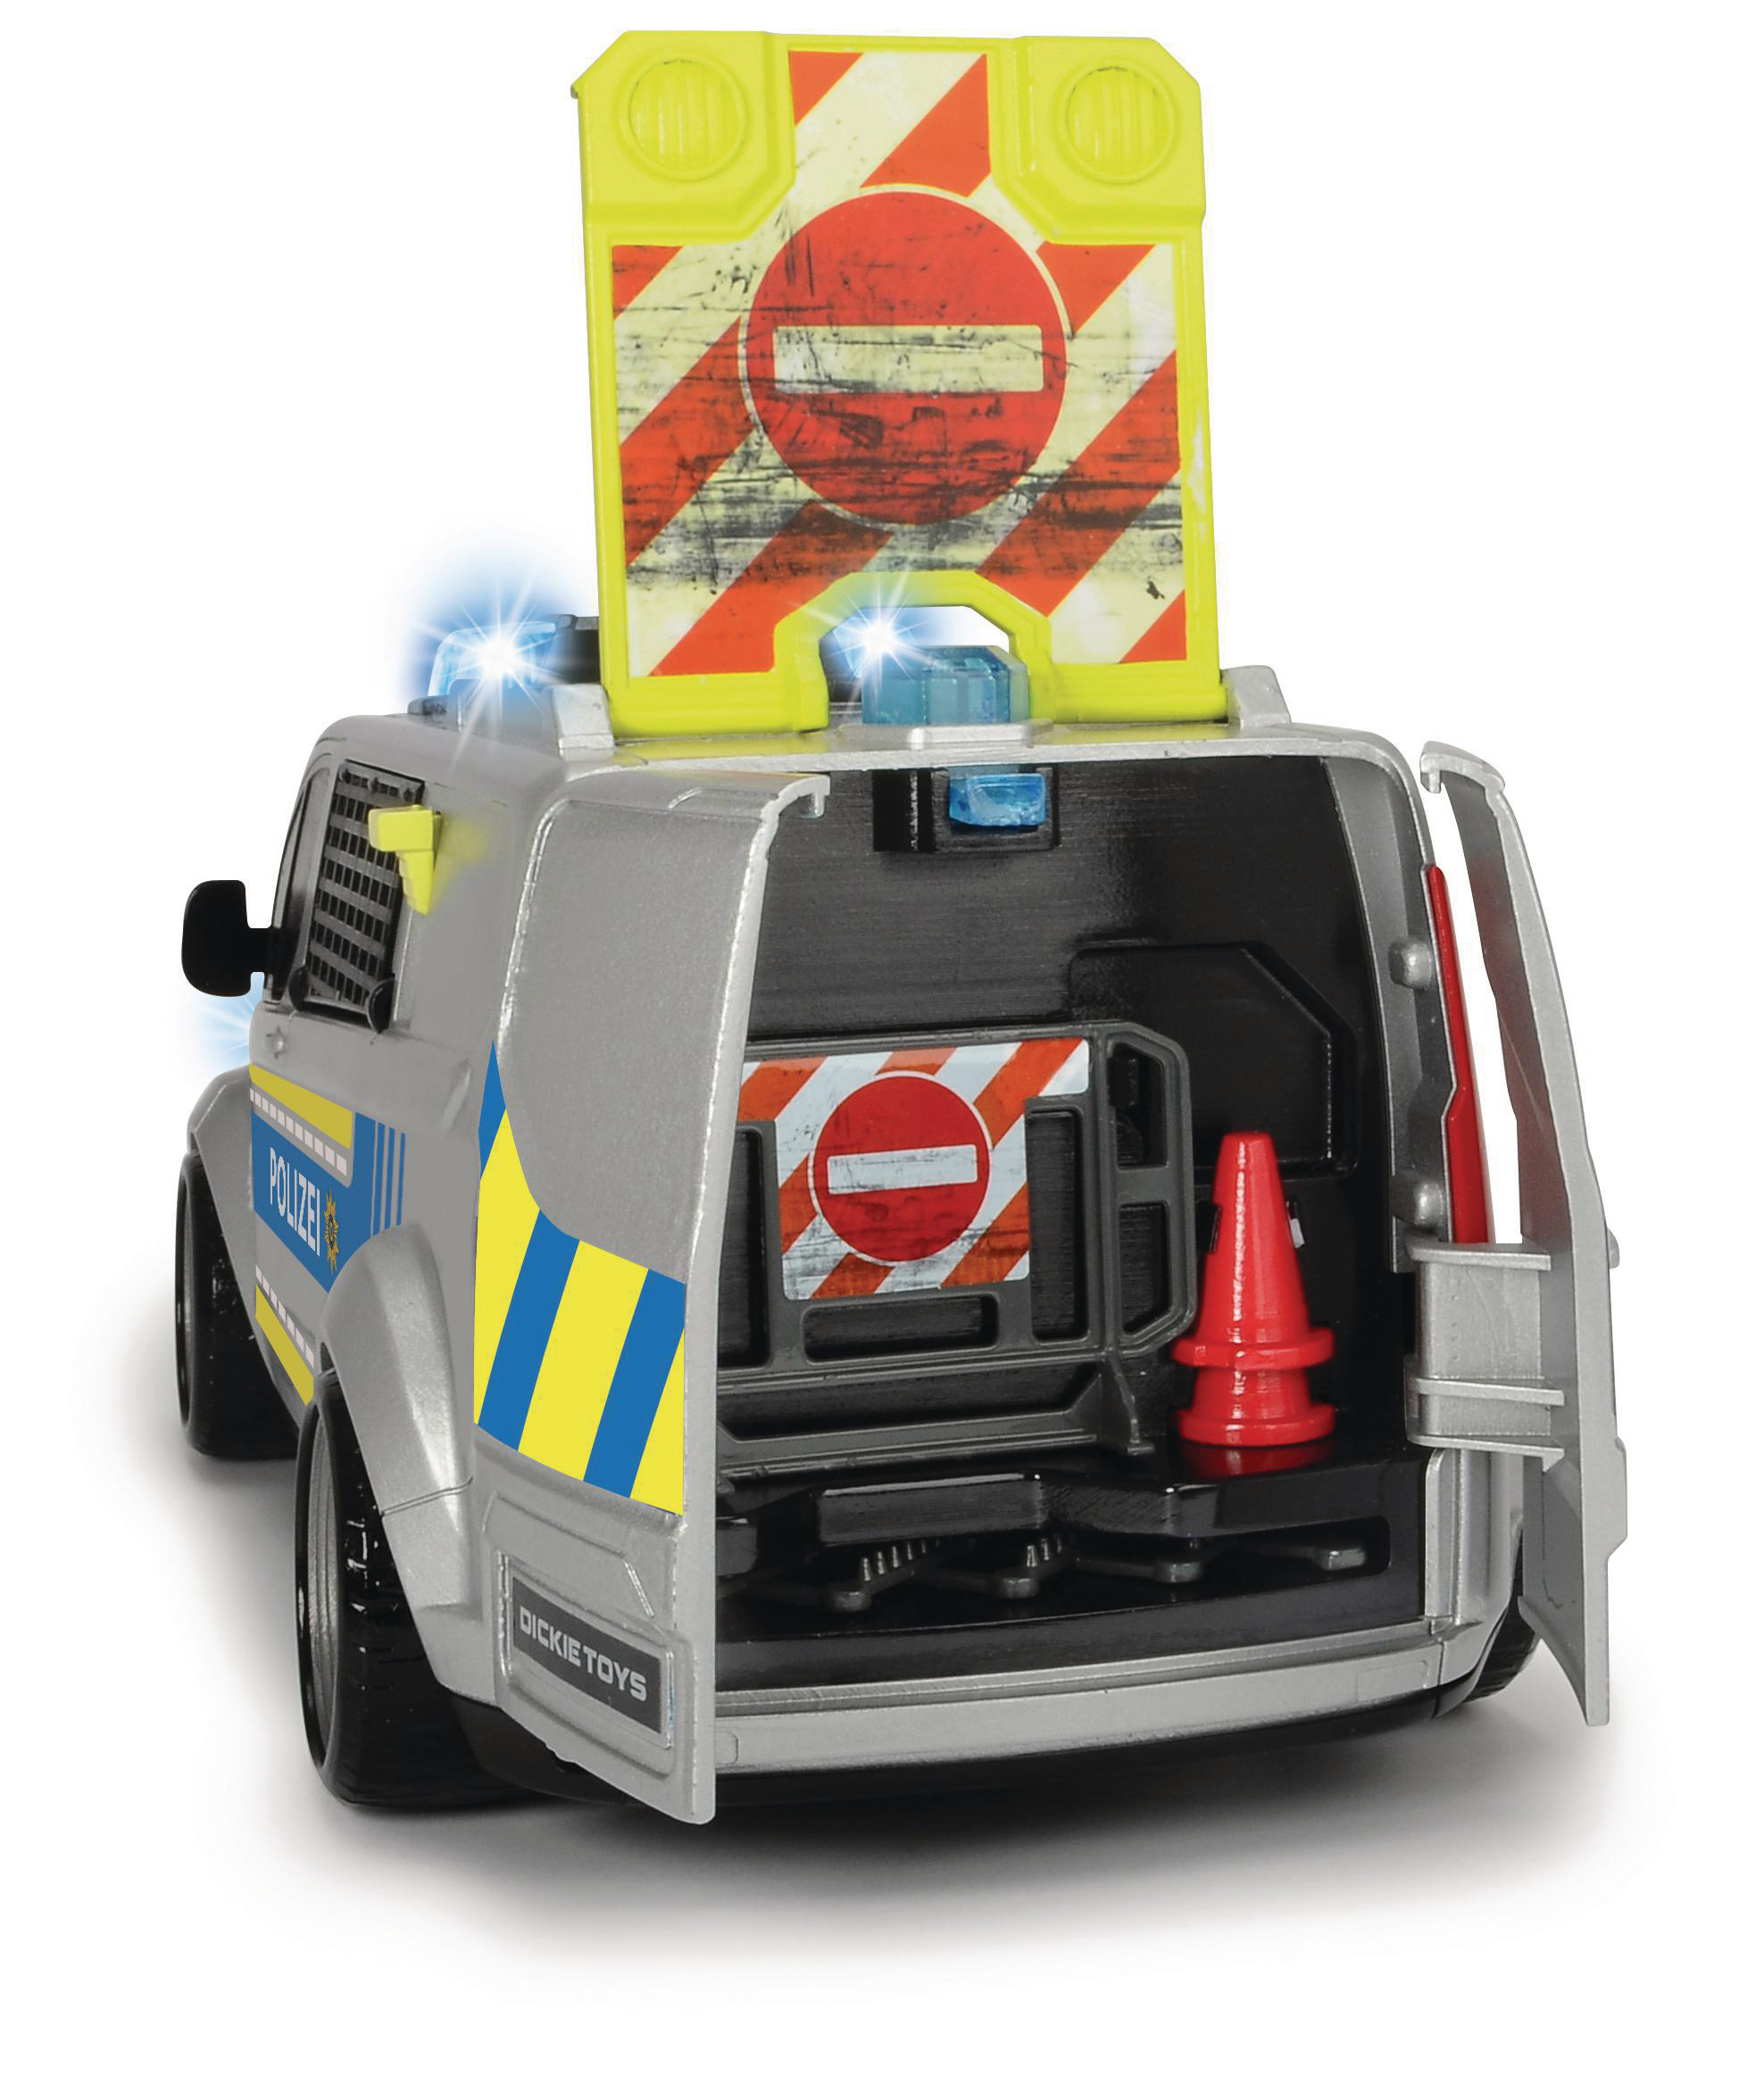 DICKIE-TOYS Ford Transit Polizei, Mehrfarbig Spielzeugauto Polizeibus